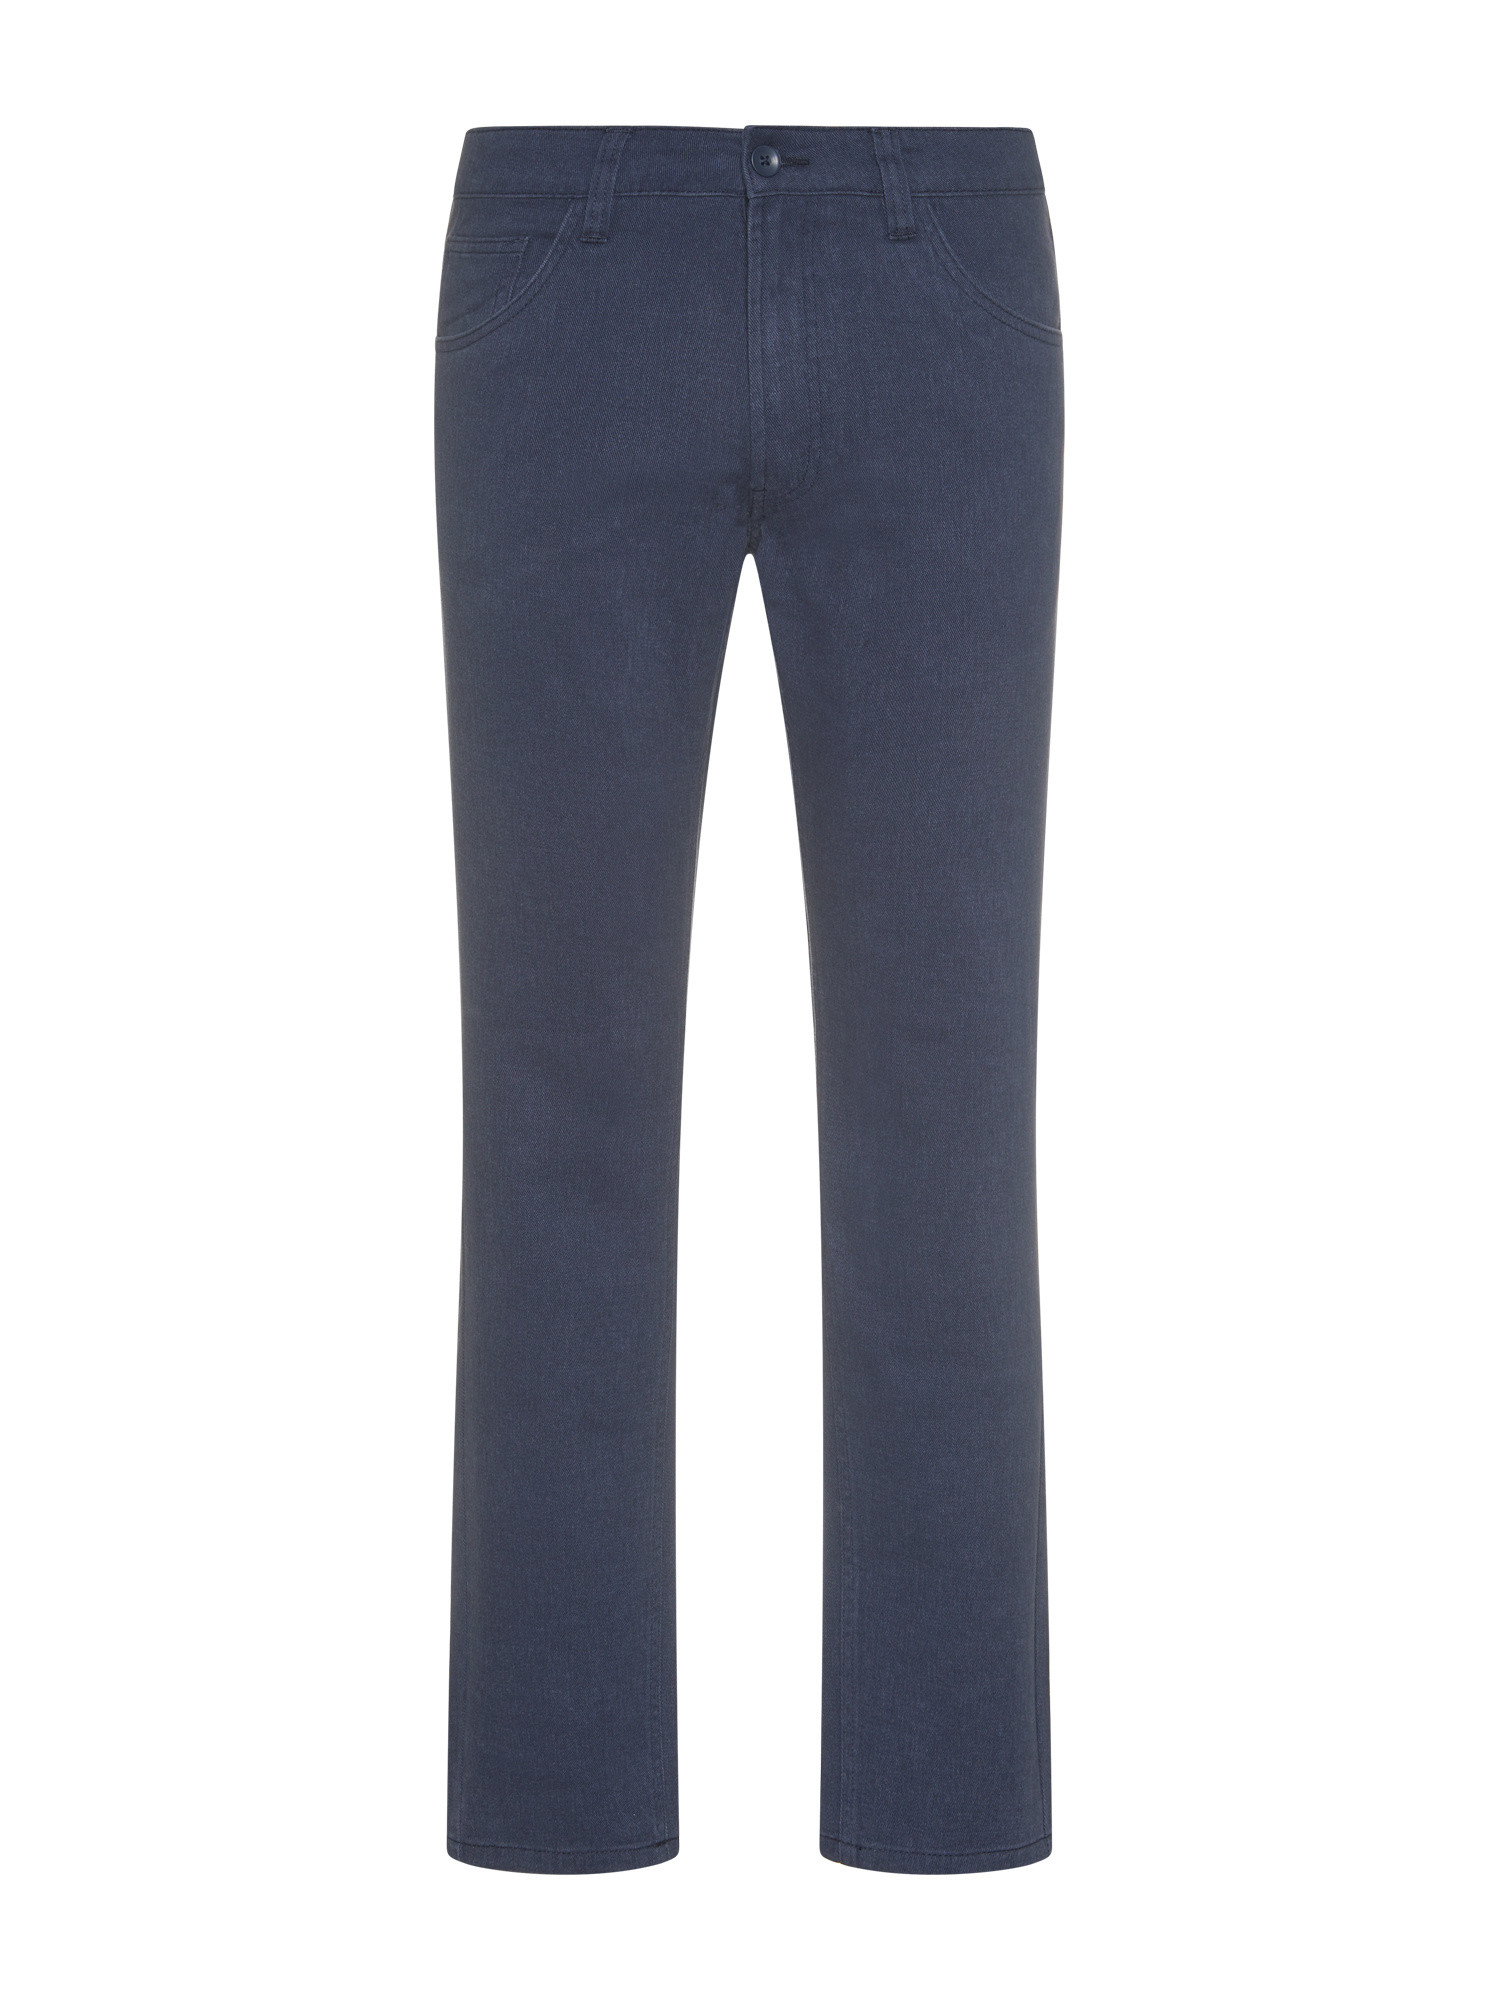 JCT брюки стандартного кроя с пятью карманами из чистого хлопка., темно-синий